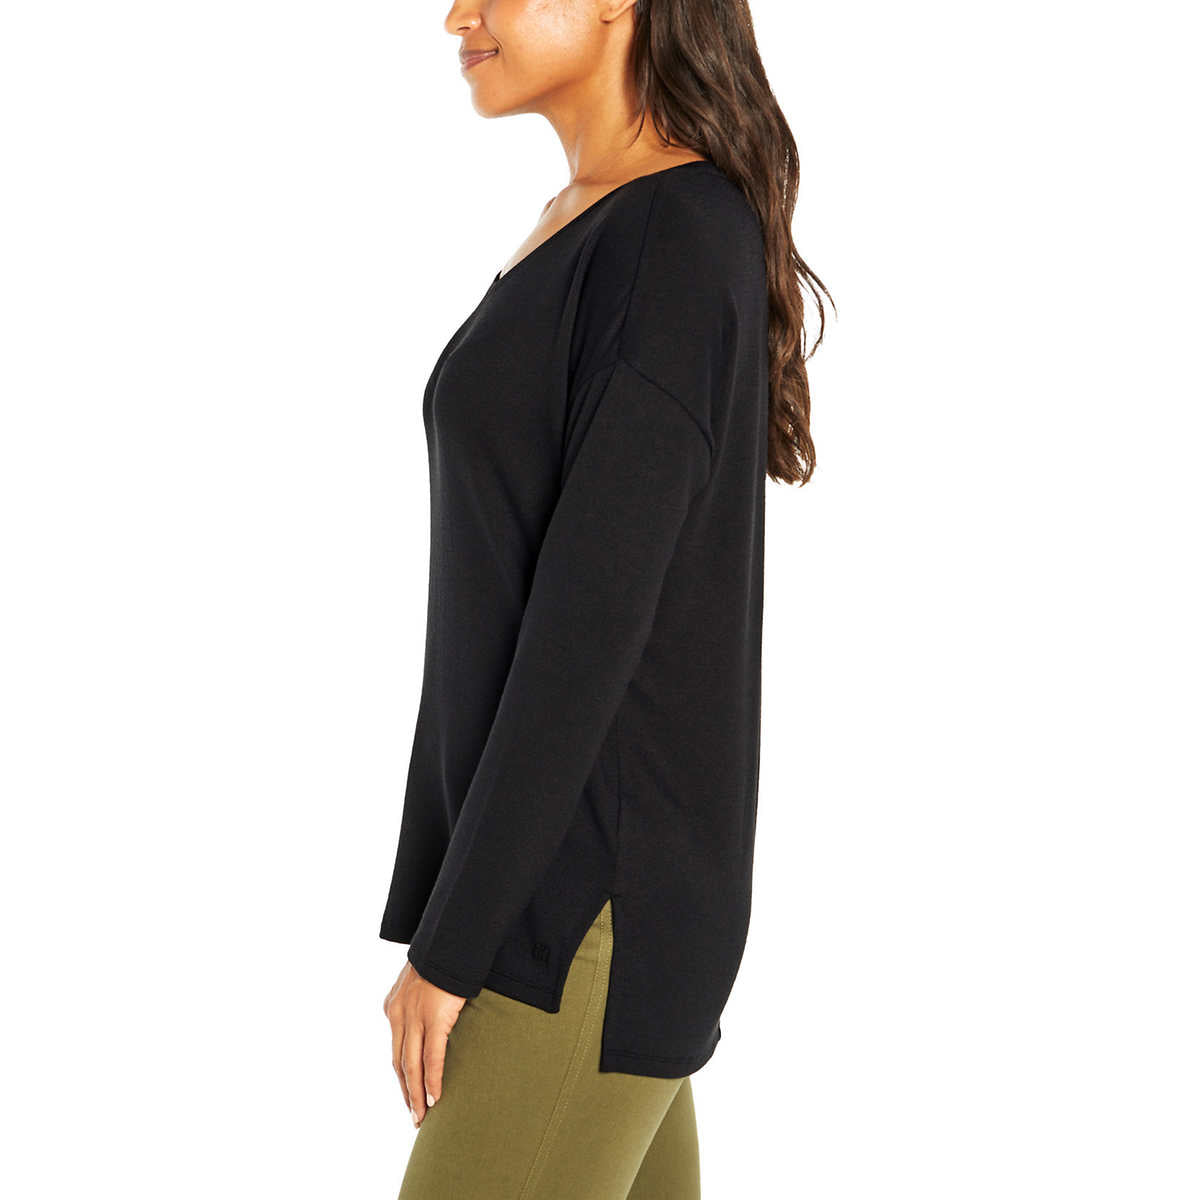 Banana Republic Women's Soft Knit Long Sleeve High-Low Hem Sweater Top